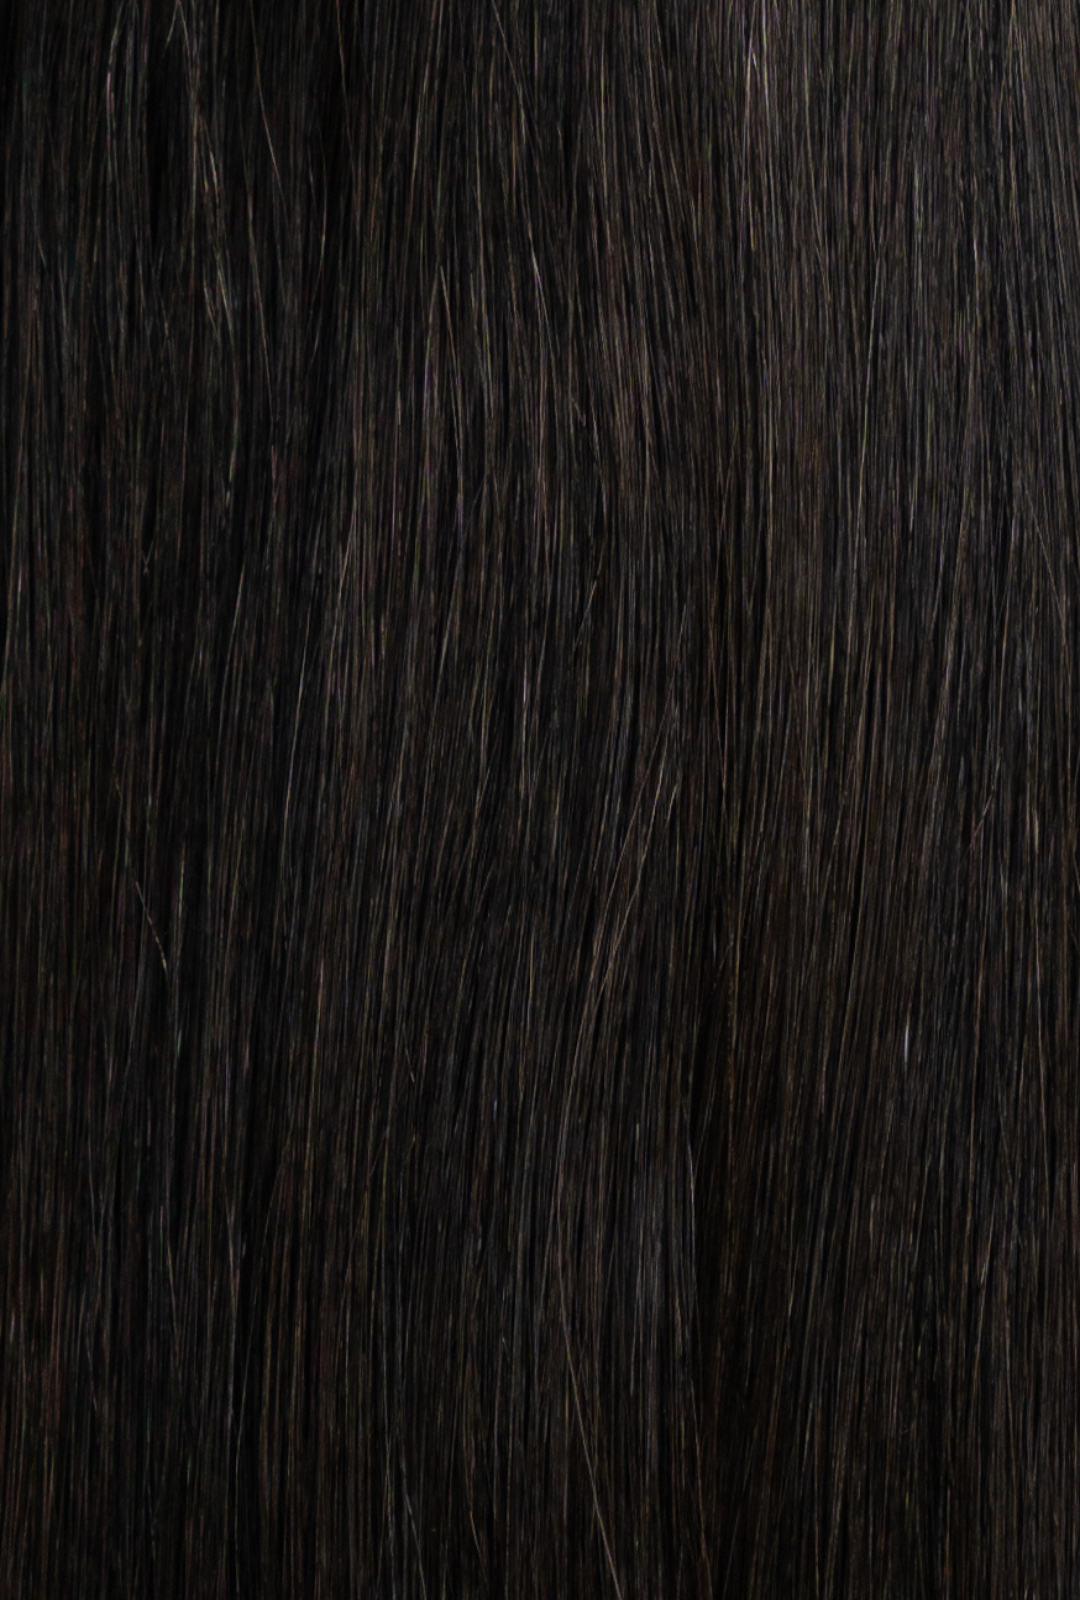 Laced Hair Clip-In Extensions #1B (Dark Roast)